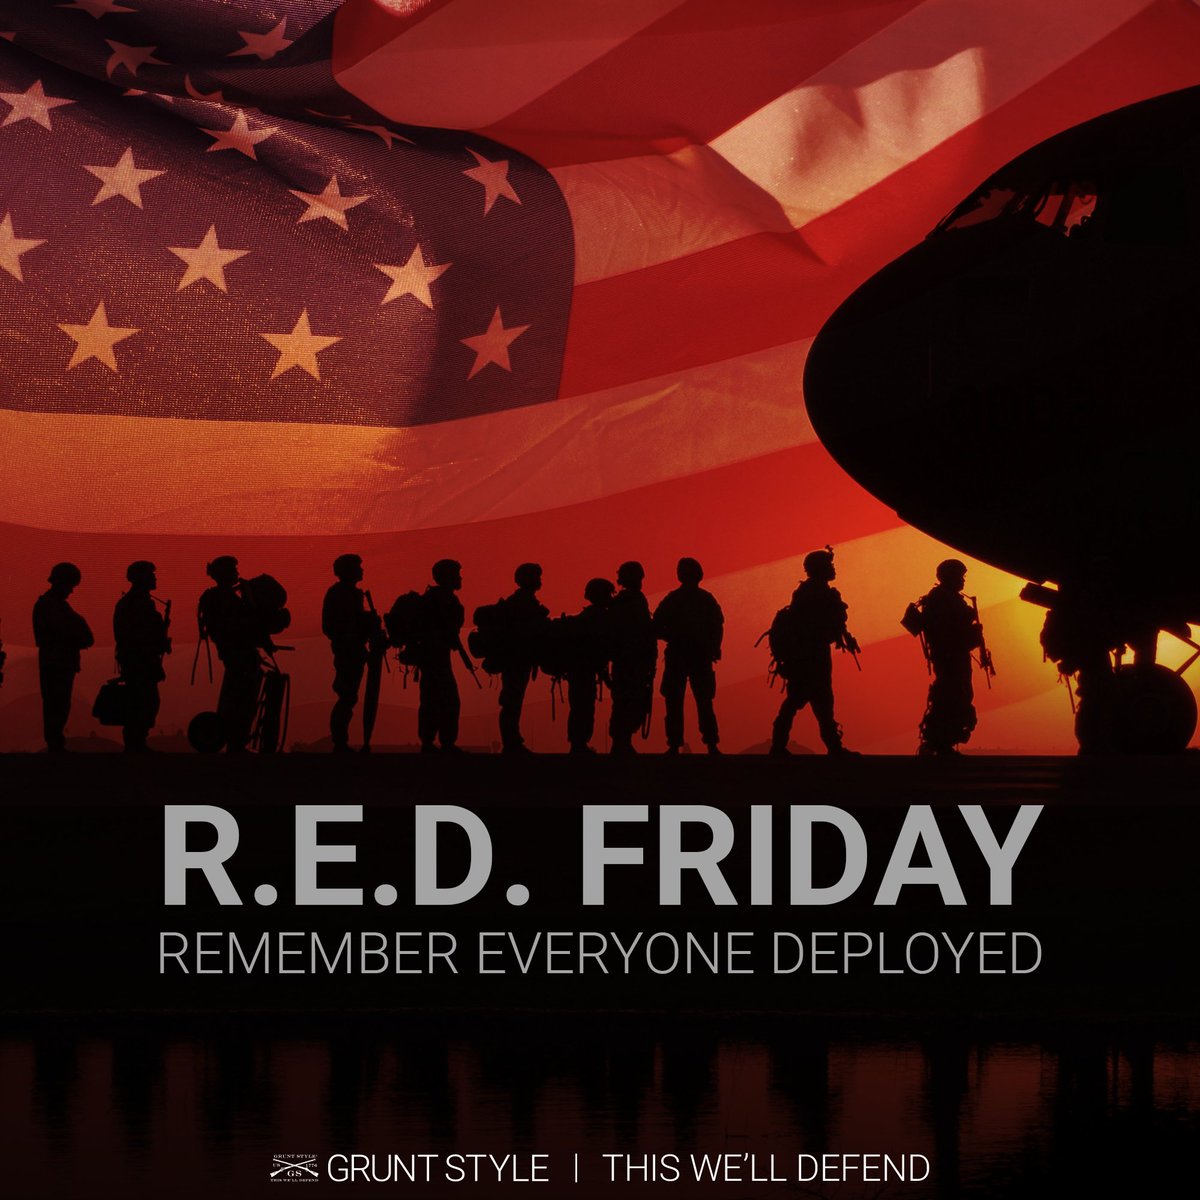 RedFriday Veterans #BuddyChecks
#Turn22To0 #EndVeteranSuicide 🇺🇸
#PTSDWarrior #JustListen🛩🛩🛩🫡➡️@jojotom747🛩🇺🇸
➡️@IDMooseMan🛩🇺🇸
➡️@fd1521e77b6443d🛩🇺🇸
➡️@AFretired1997🛩🇺🇸
➡️@WarVetOne1🛩🇺🇸
➡️@RagingAngel76🛩🇺🇸